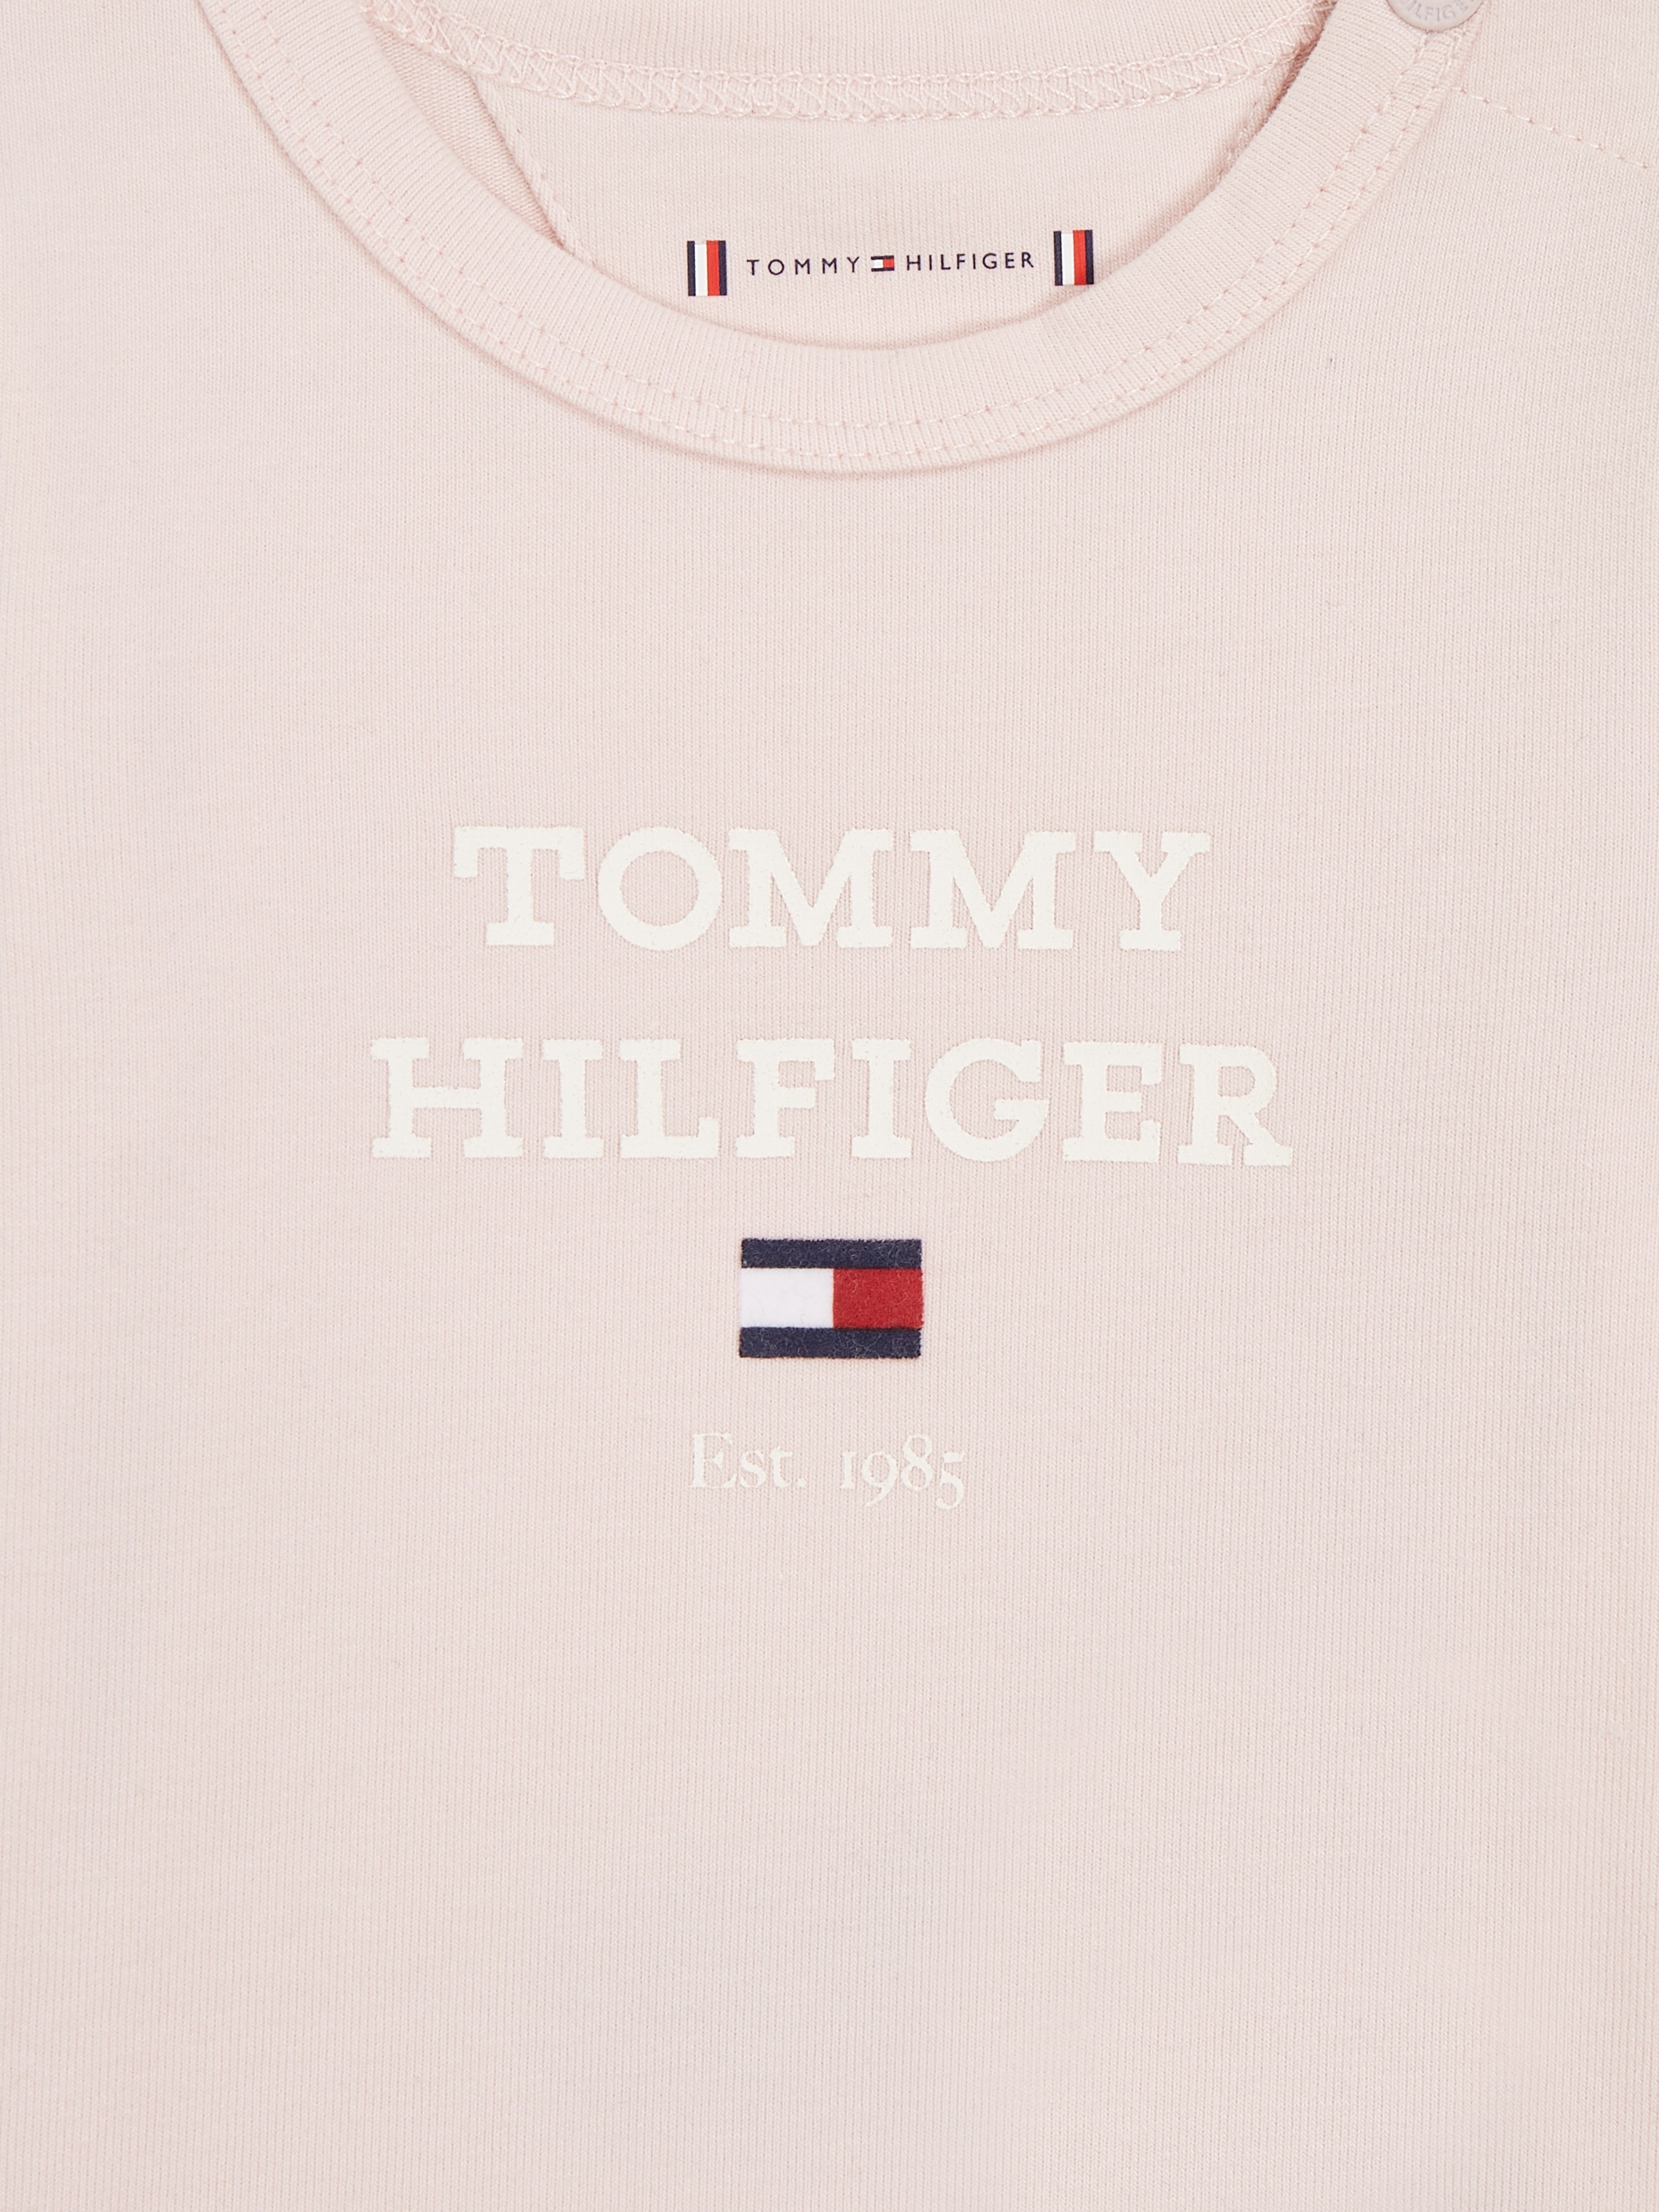 Tommy Hilfiger Overall »BABY TH LOGO BODY L/S«, mit Logoschriftzug